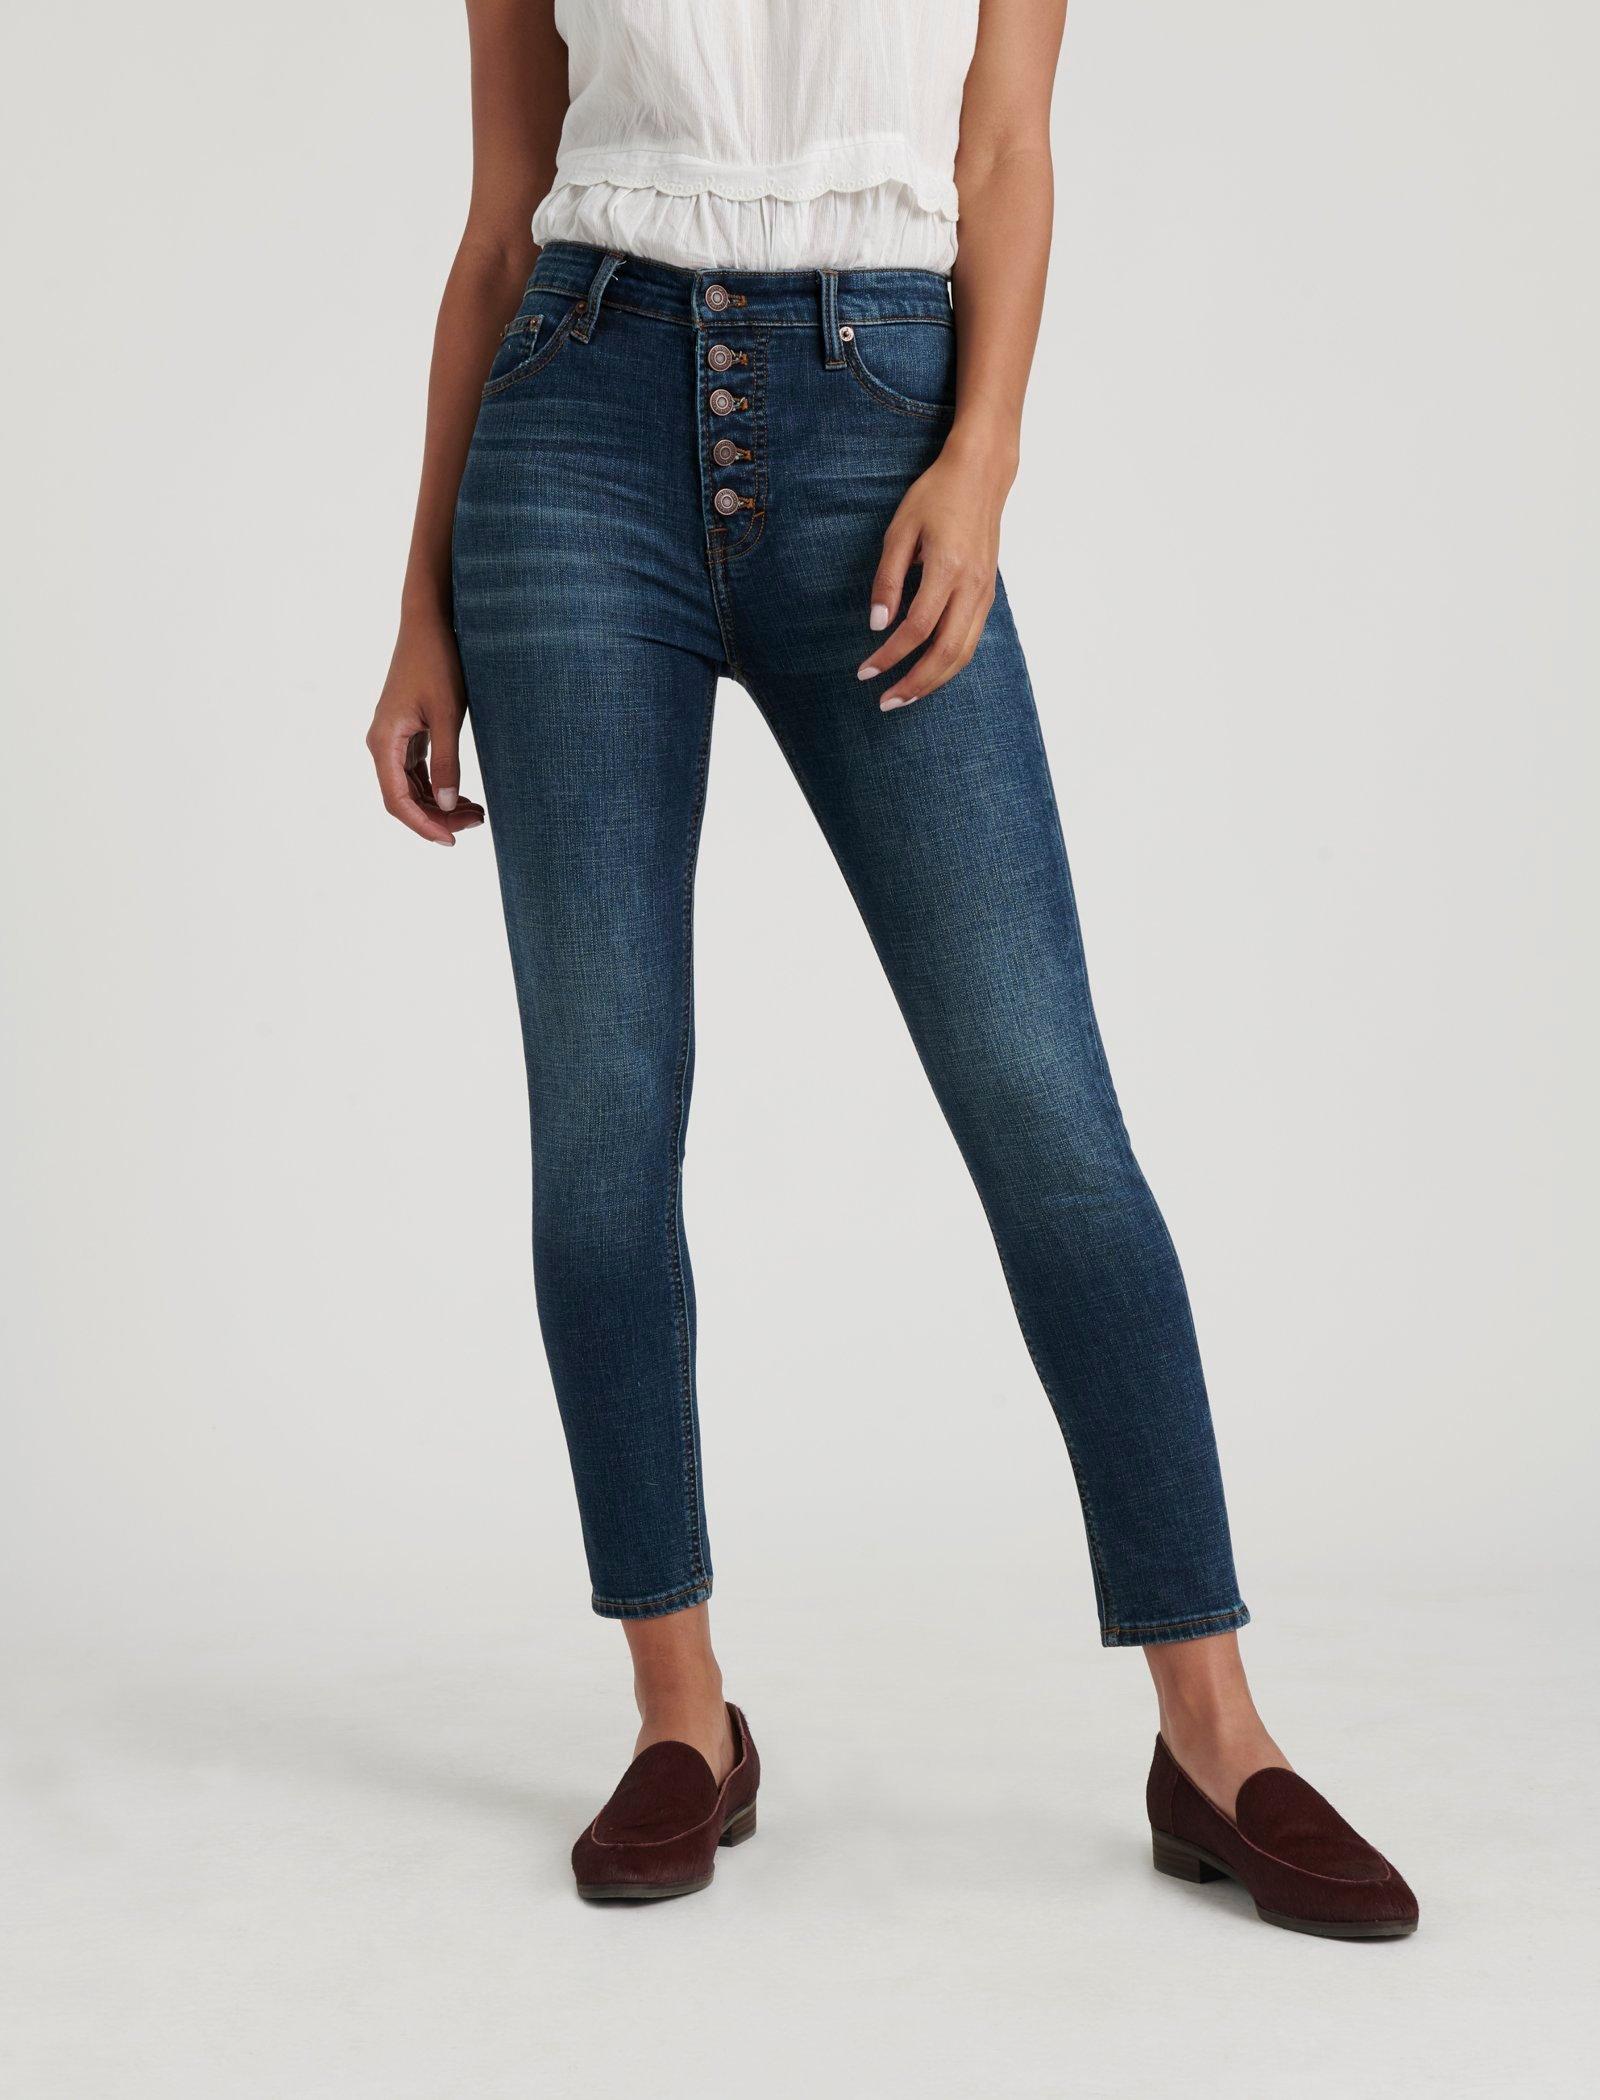 bridgette lucky brand jeans